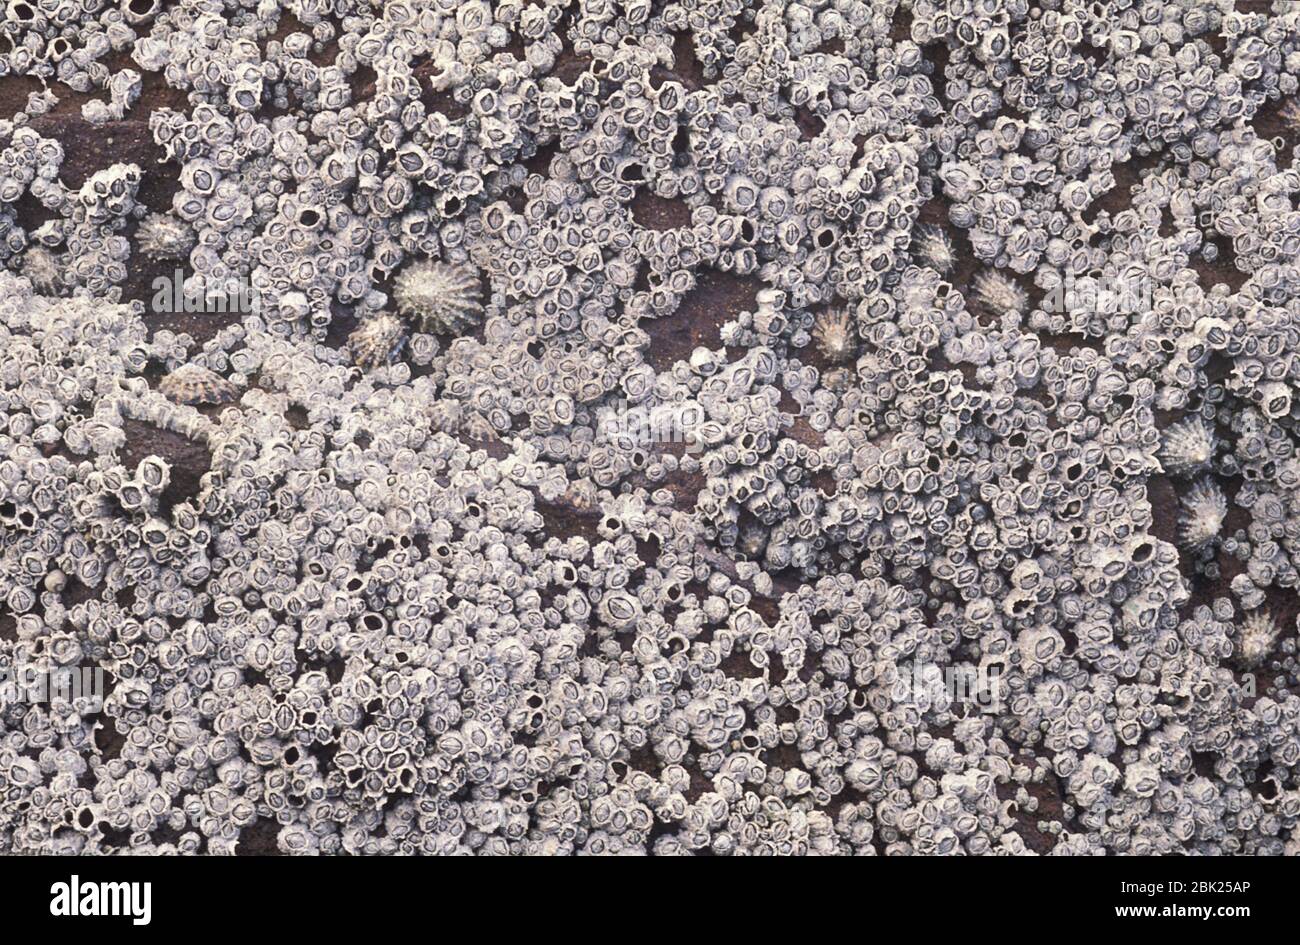 Acorn Barnacles, Semibalanus balanoides, on rocks at beach, UK Stock Photo